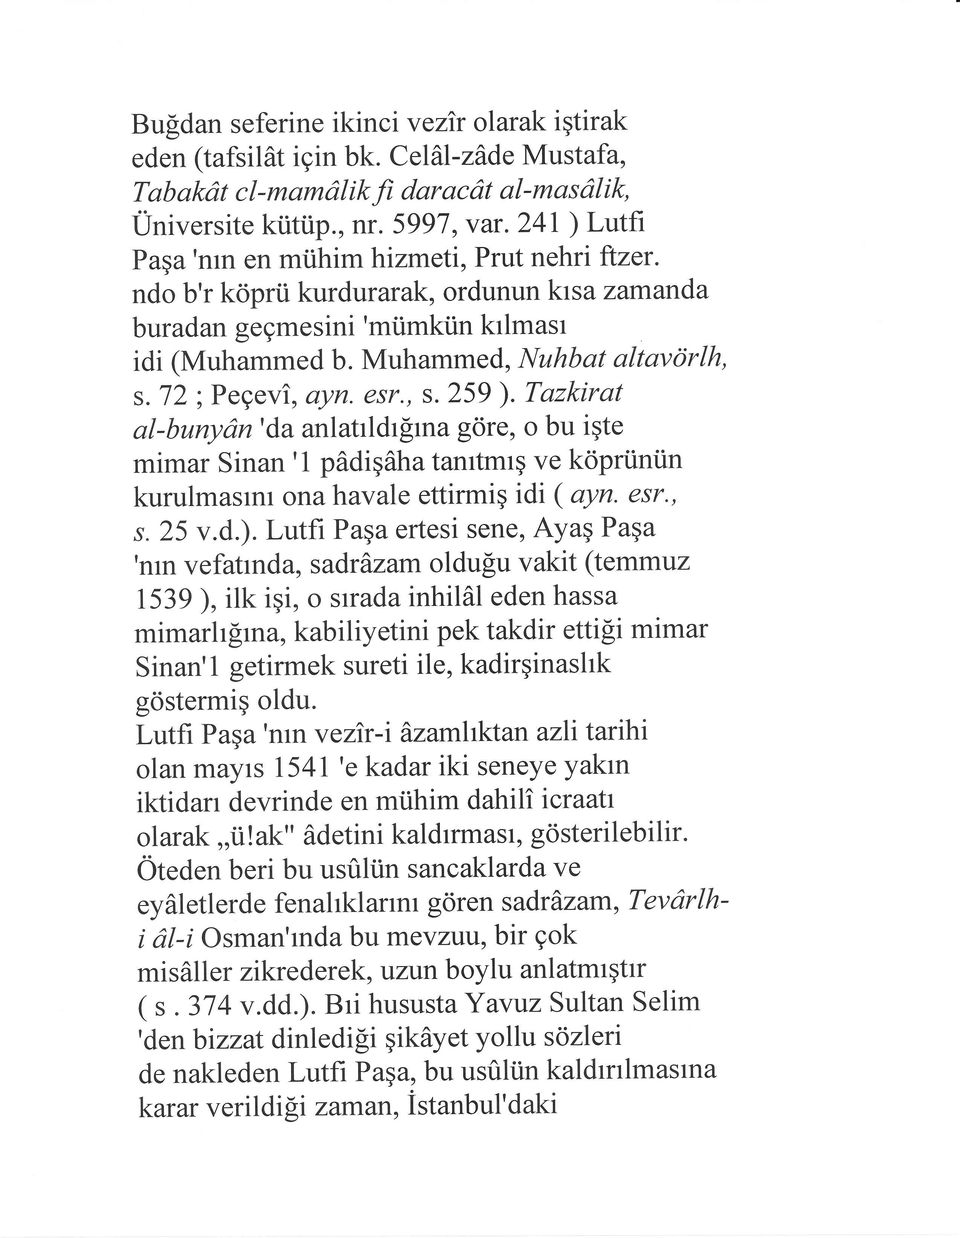 72; Pegevi, ayn. esr., s.259 ).